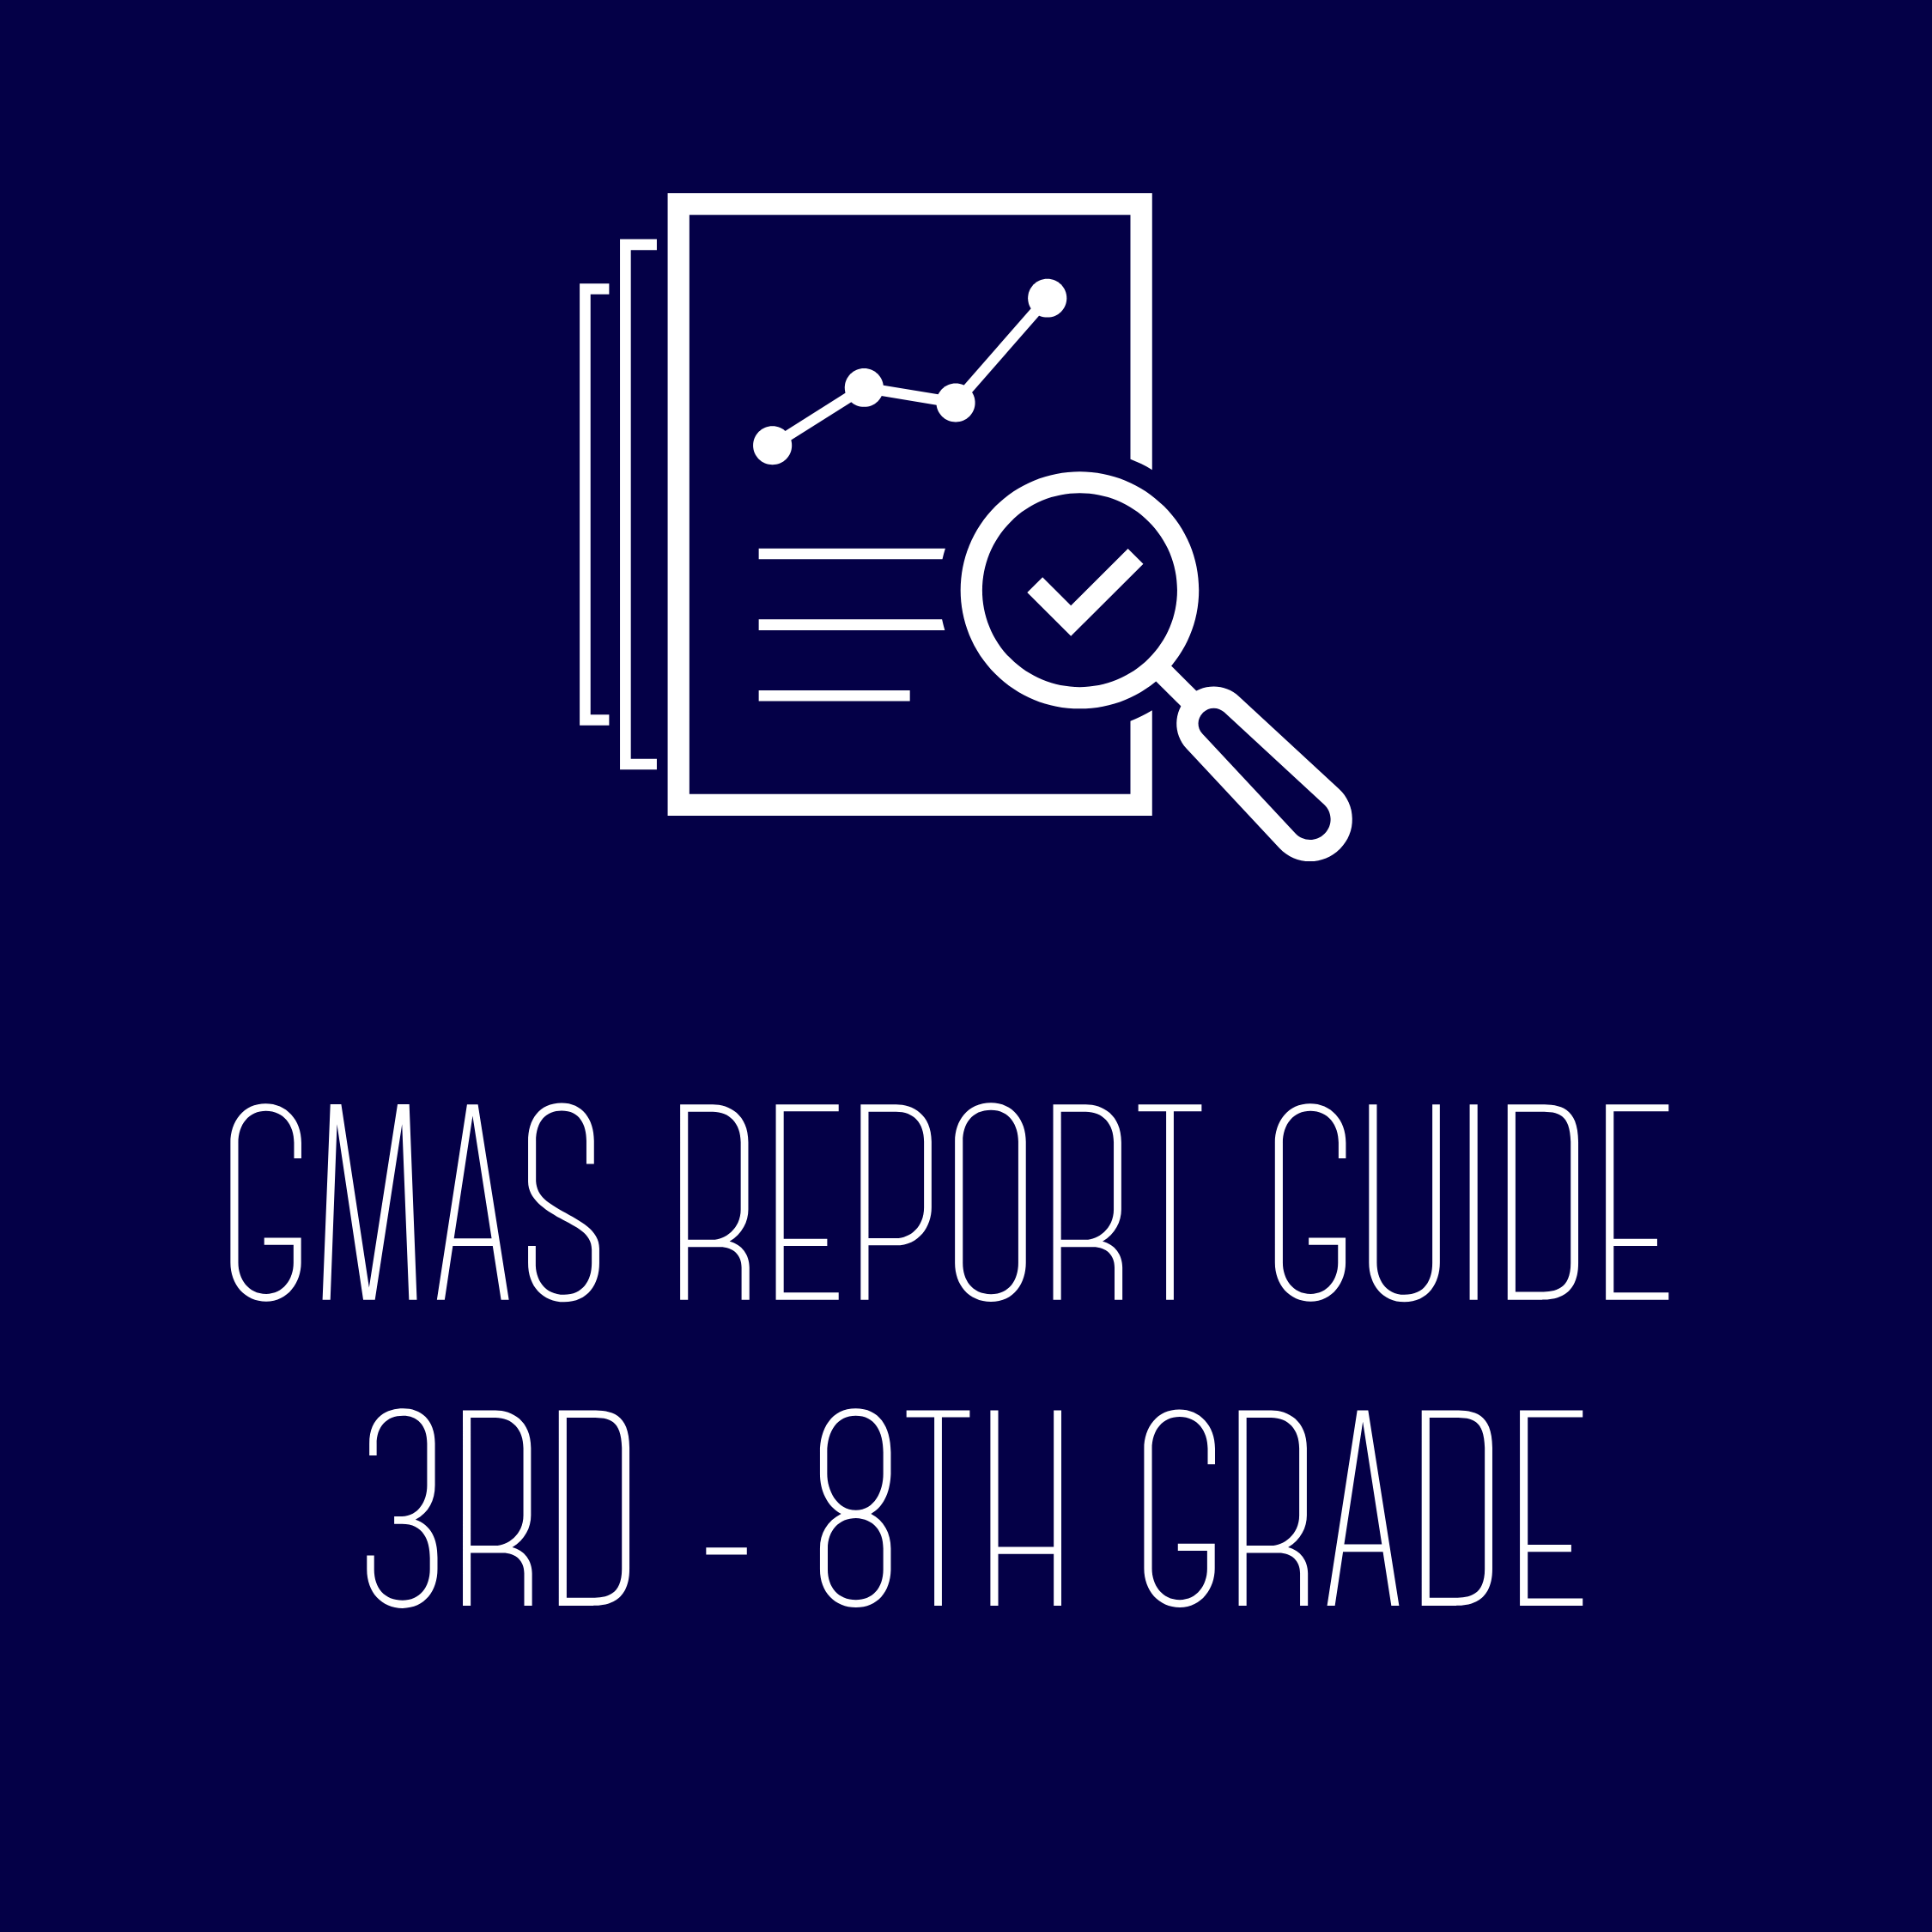 GMAS Report Guide 3rd - 8th Grade